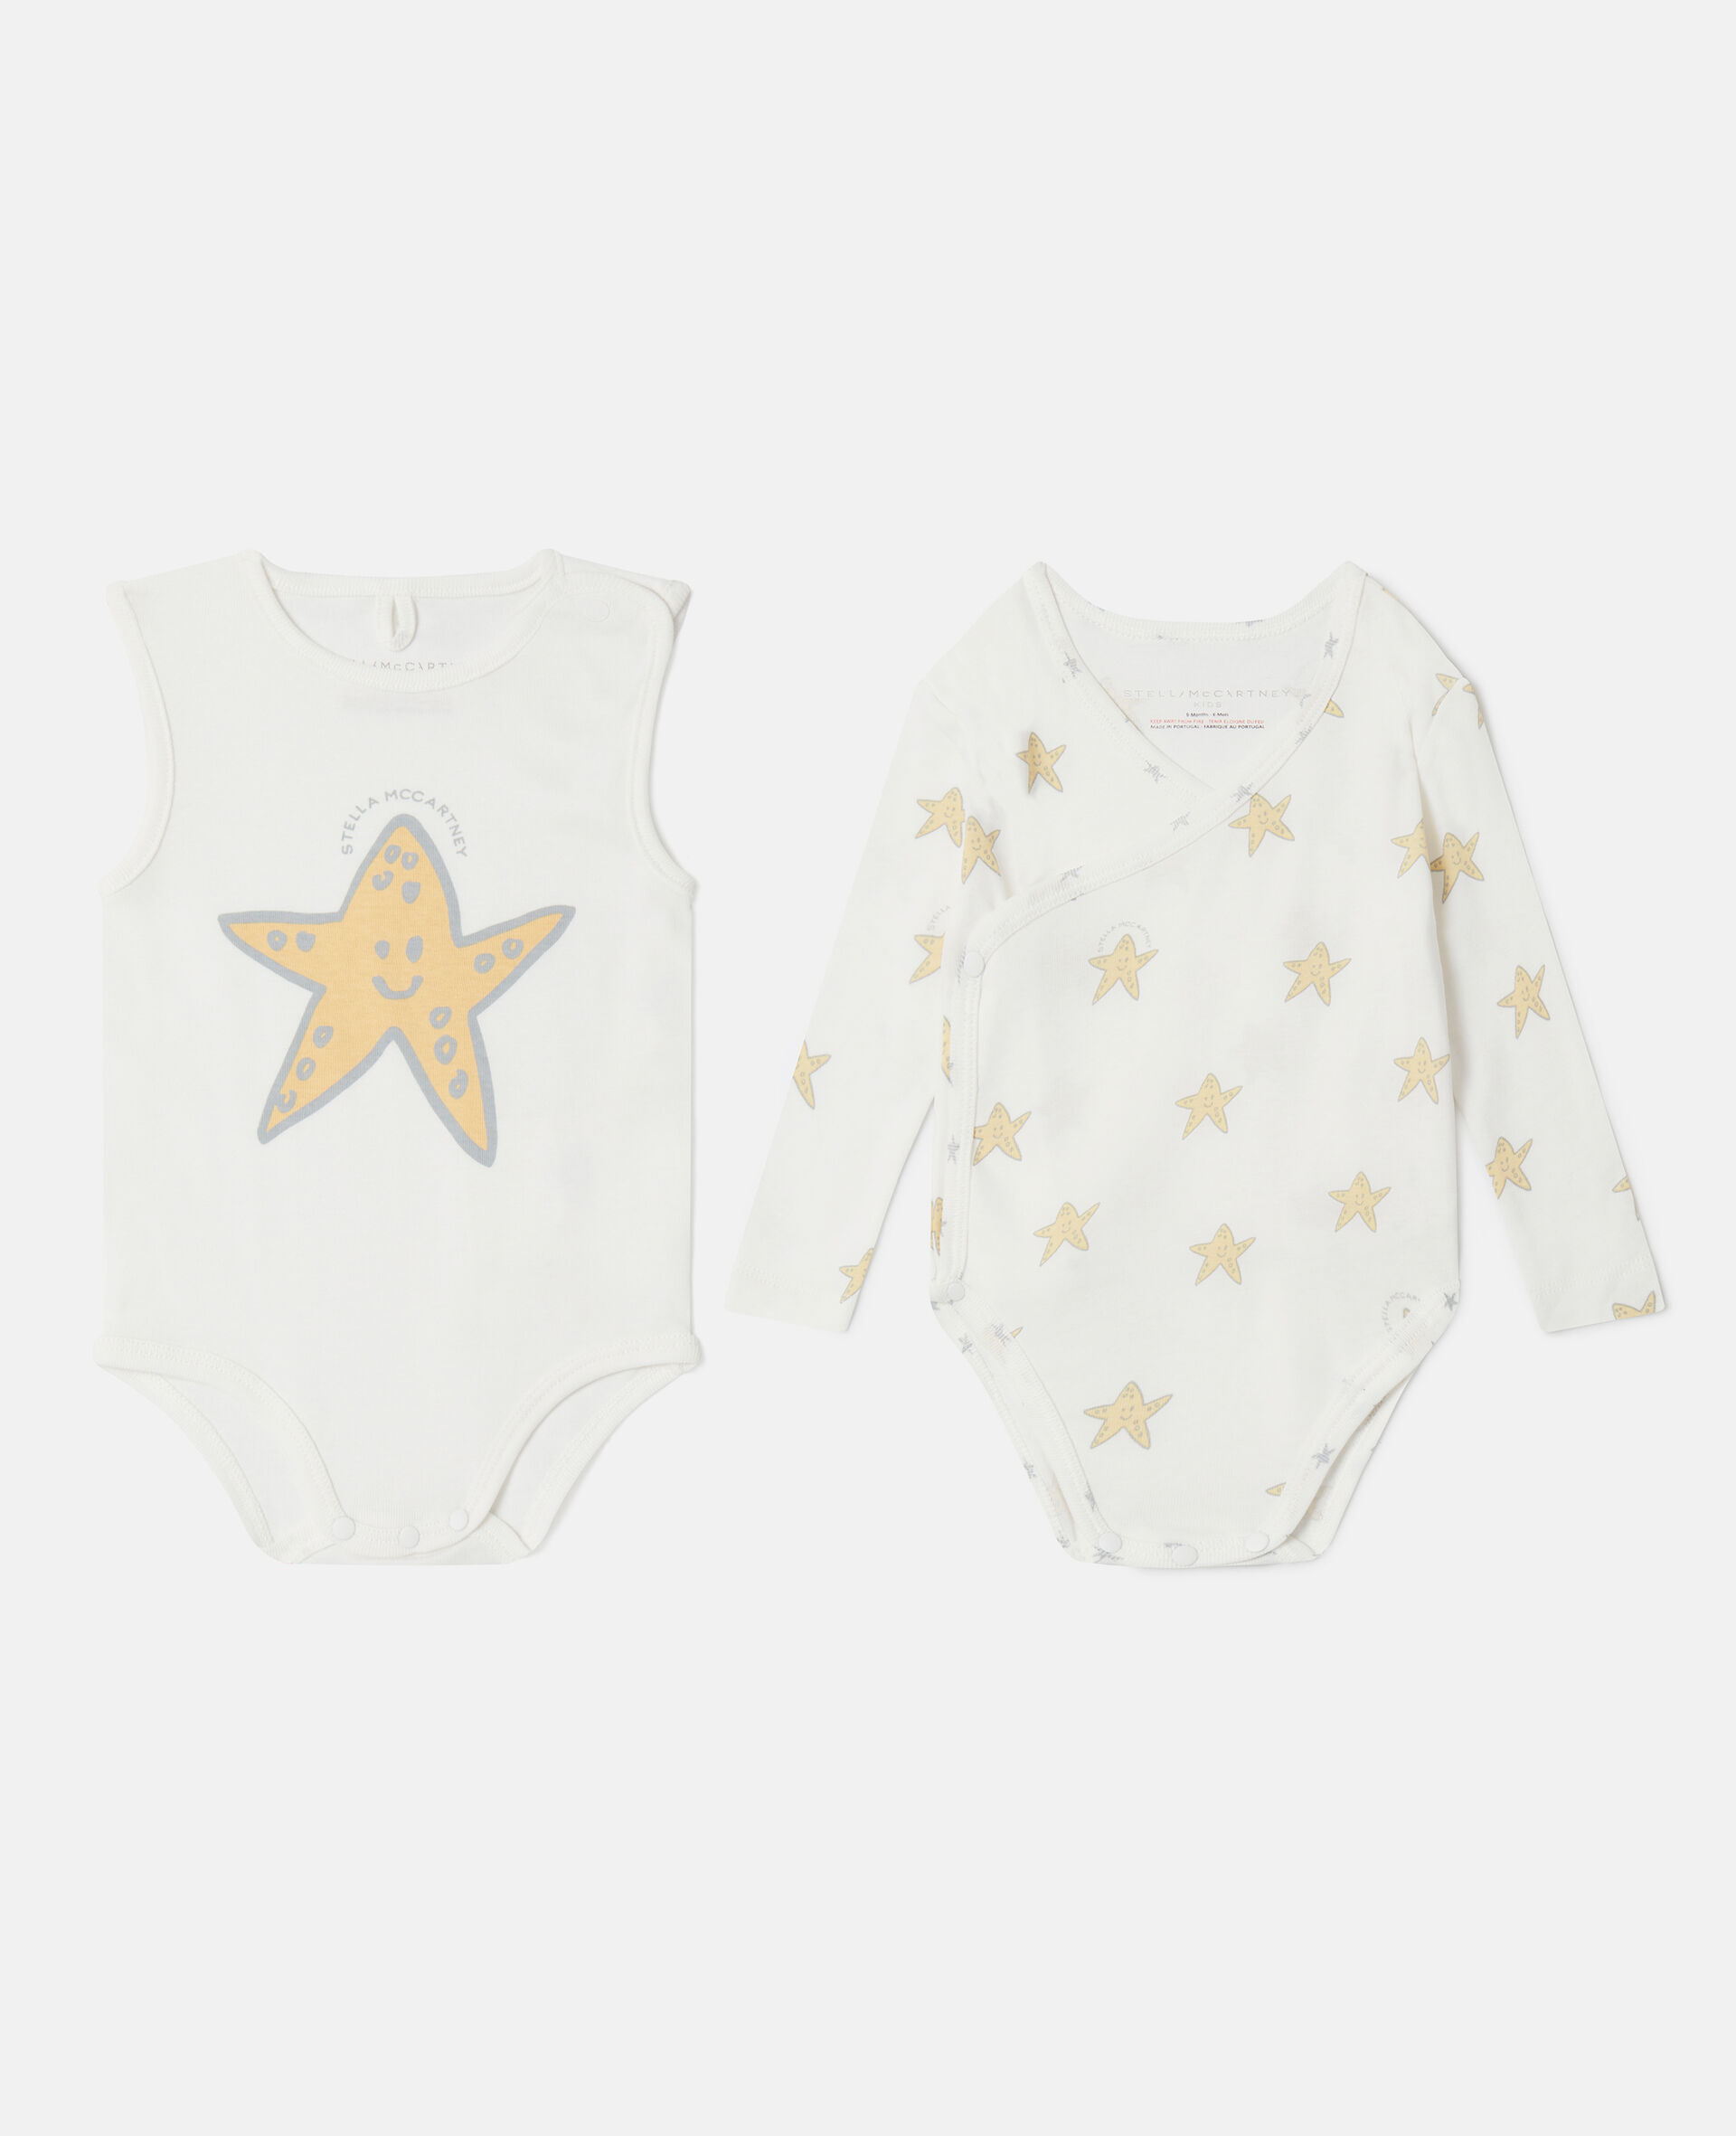 Smiling Stella Star Print Bodysuit and Sleepsuit Set-Fantaisie-medium